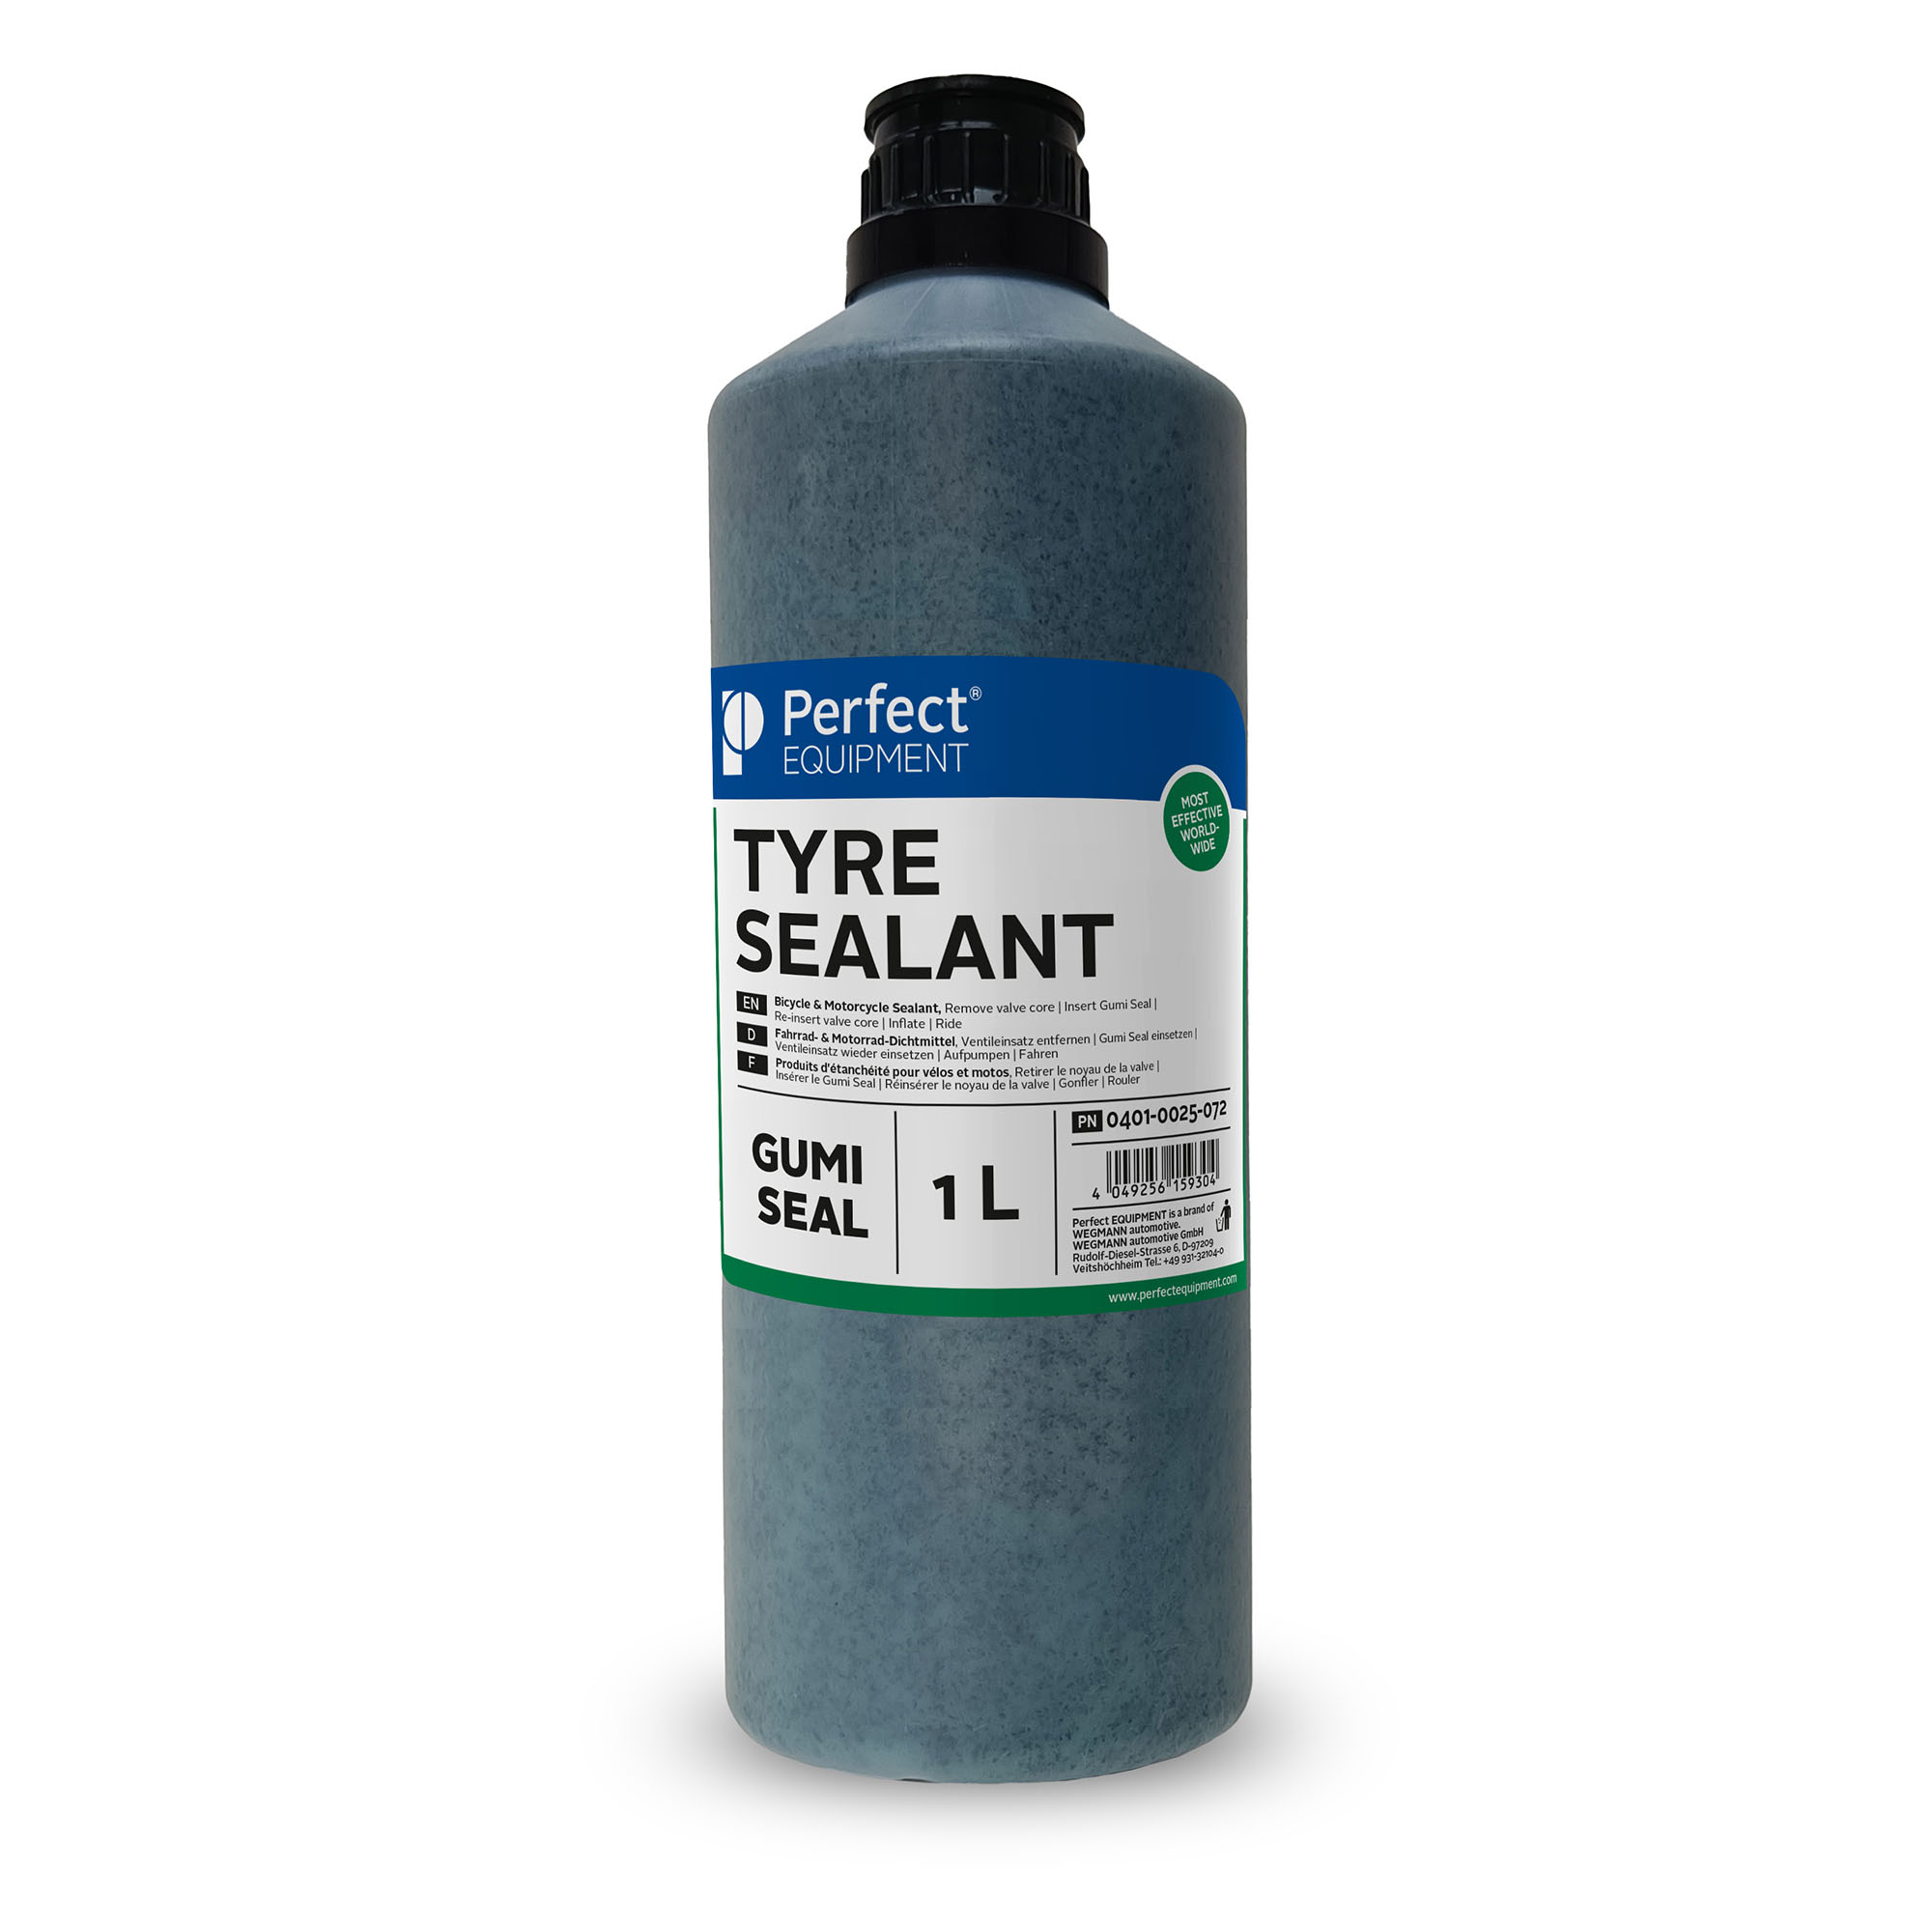 Sigillante per pneumatici - Gumi Seal, 1l, bottiglia